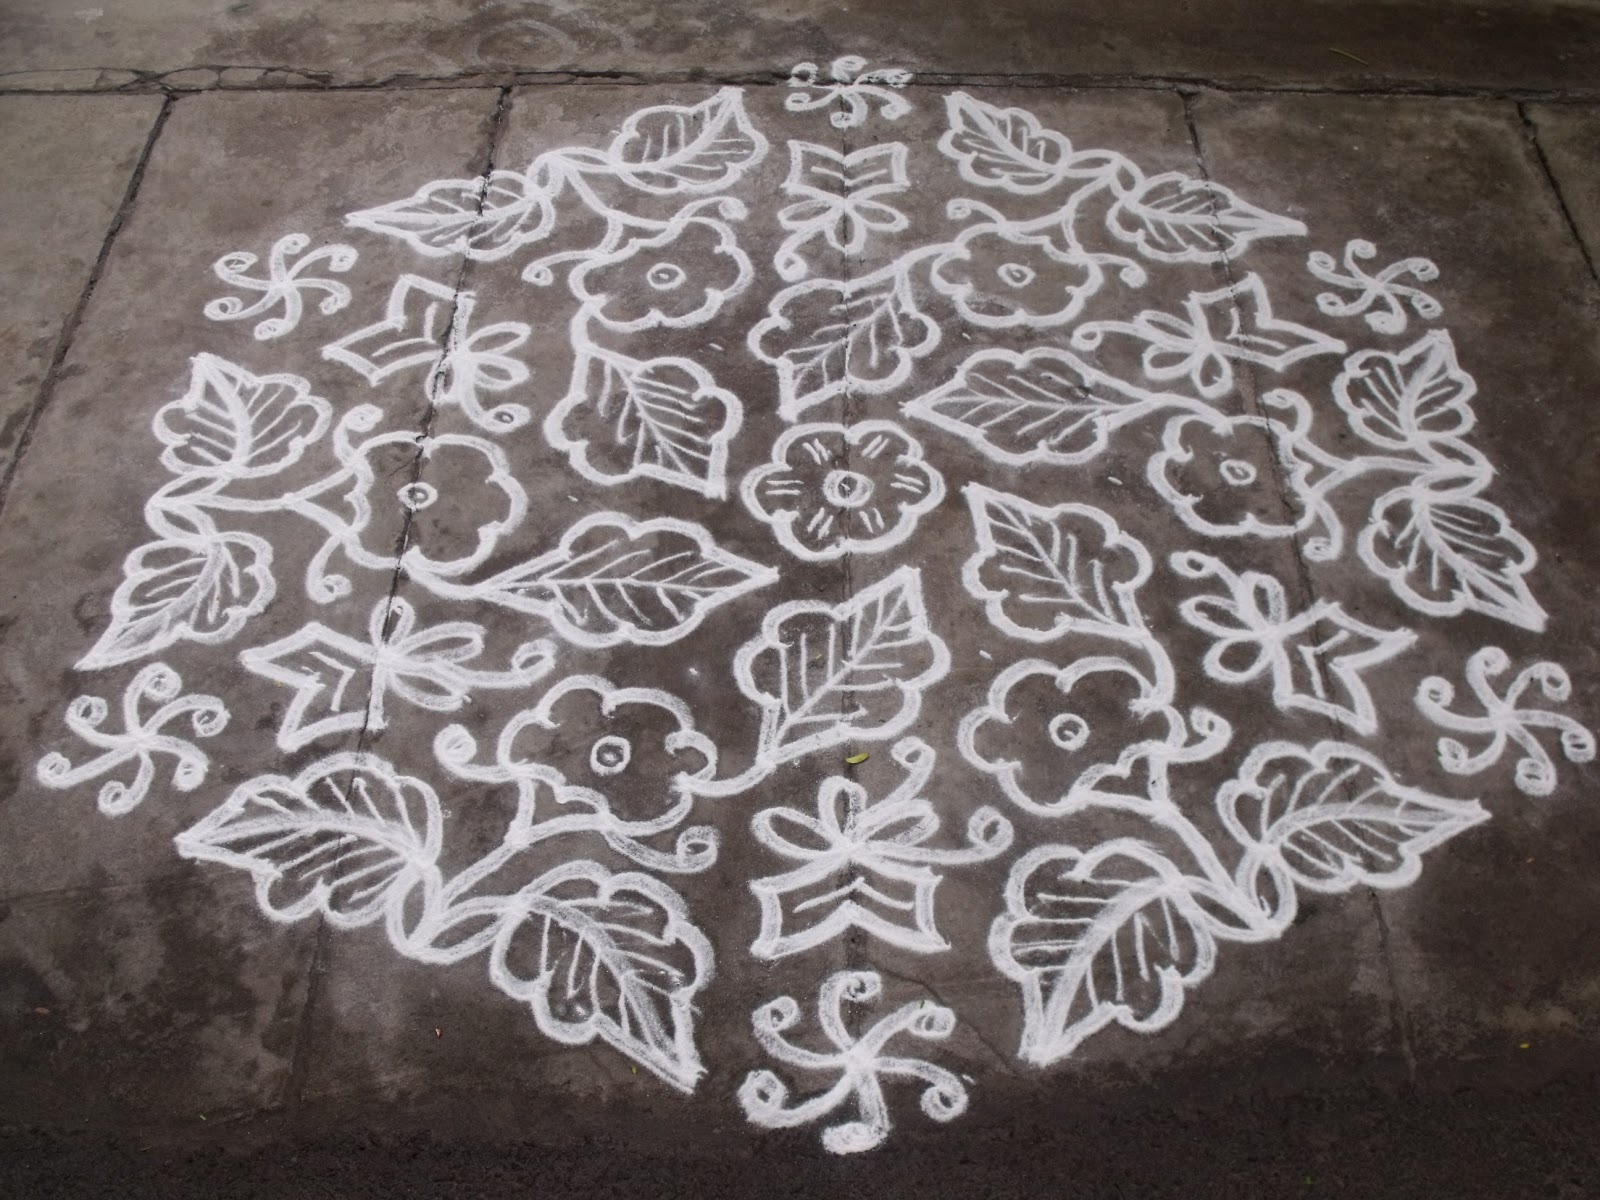 Rangoli designs/Kolam: S.No. 51 :-21-11 pulli kolam - interlaced dots kolam